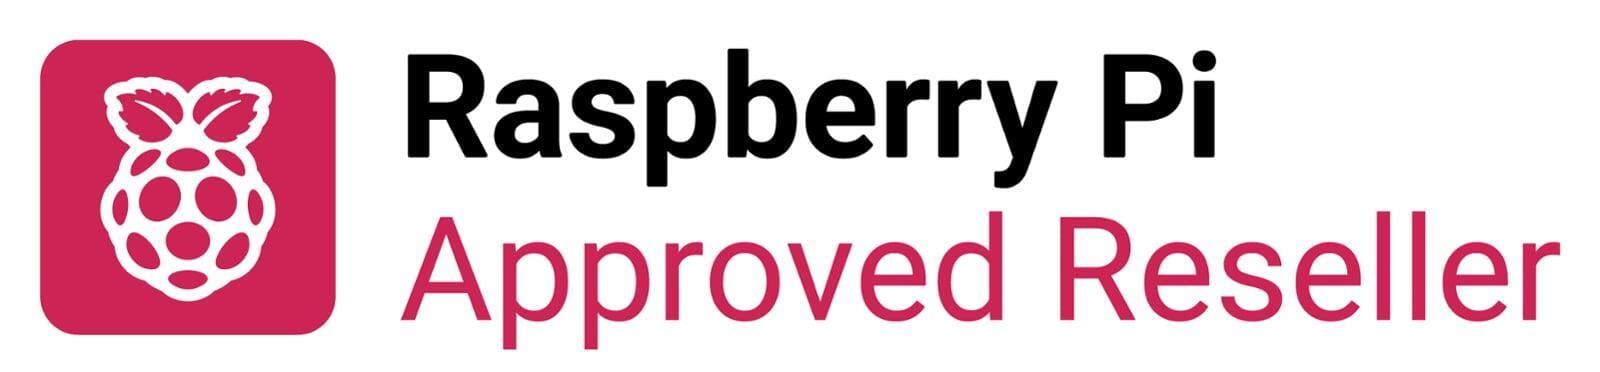 Raspberry Pi distributor